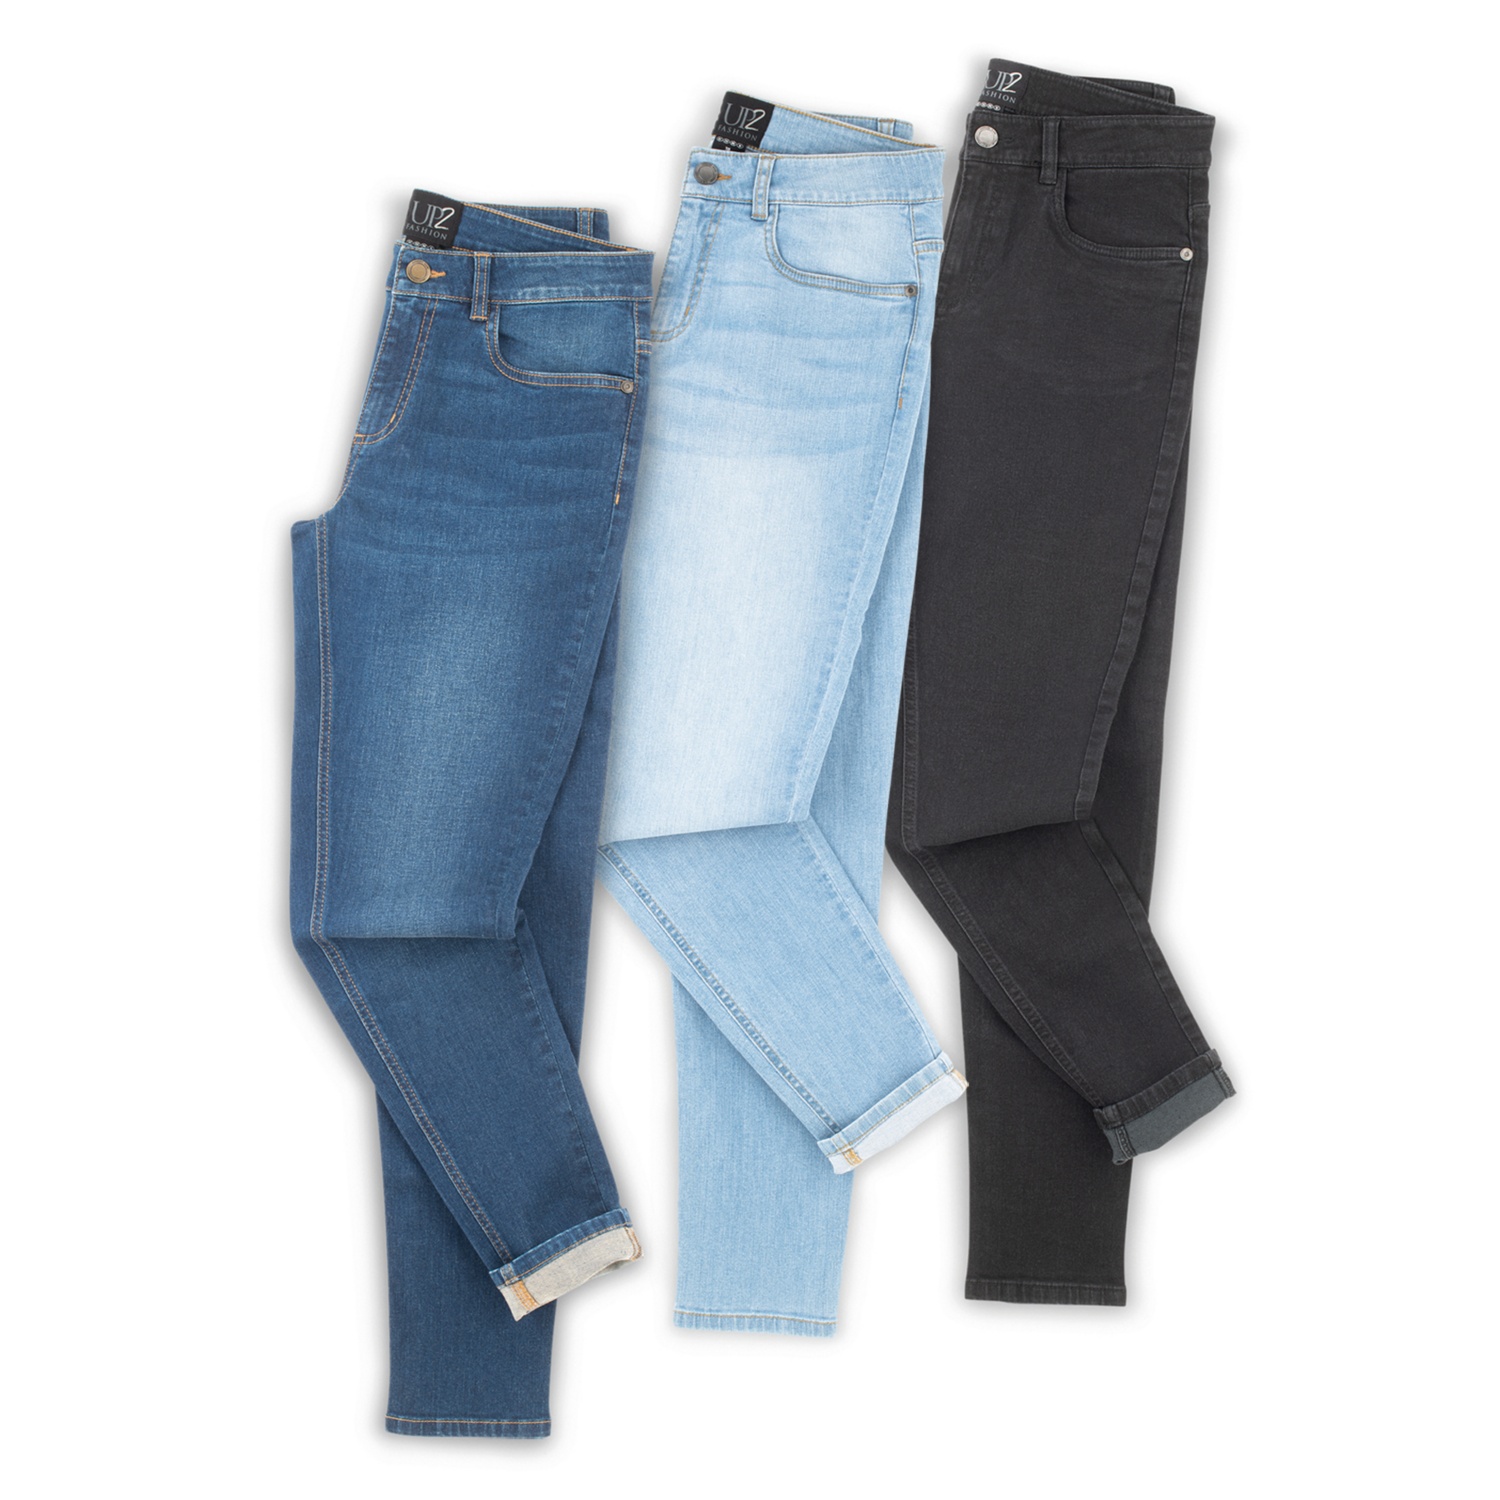 UP 2 FASHION WOMAN Damen-Jeans, Baumwolle (BIO)